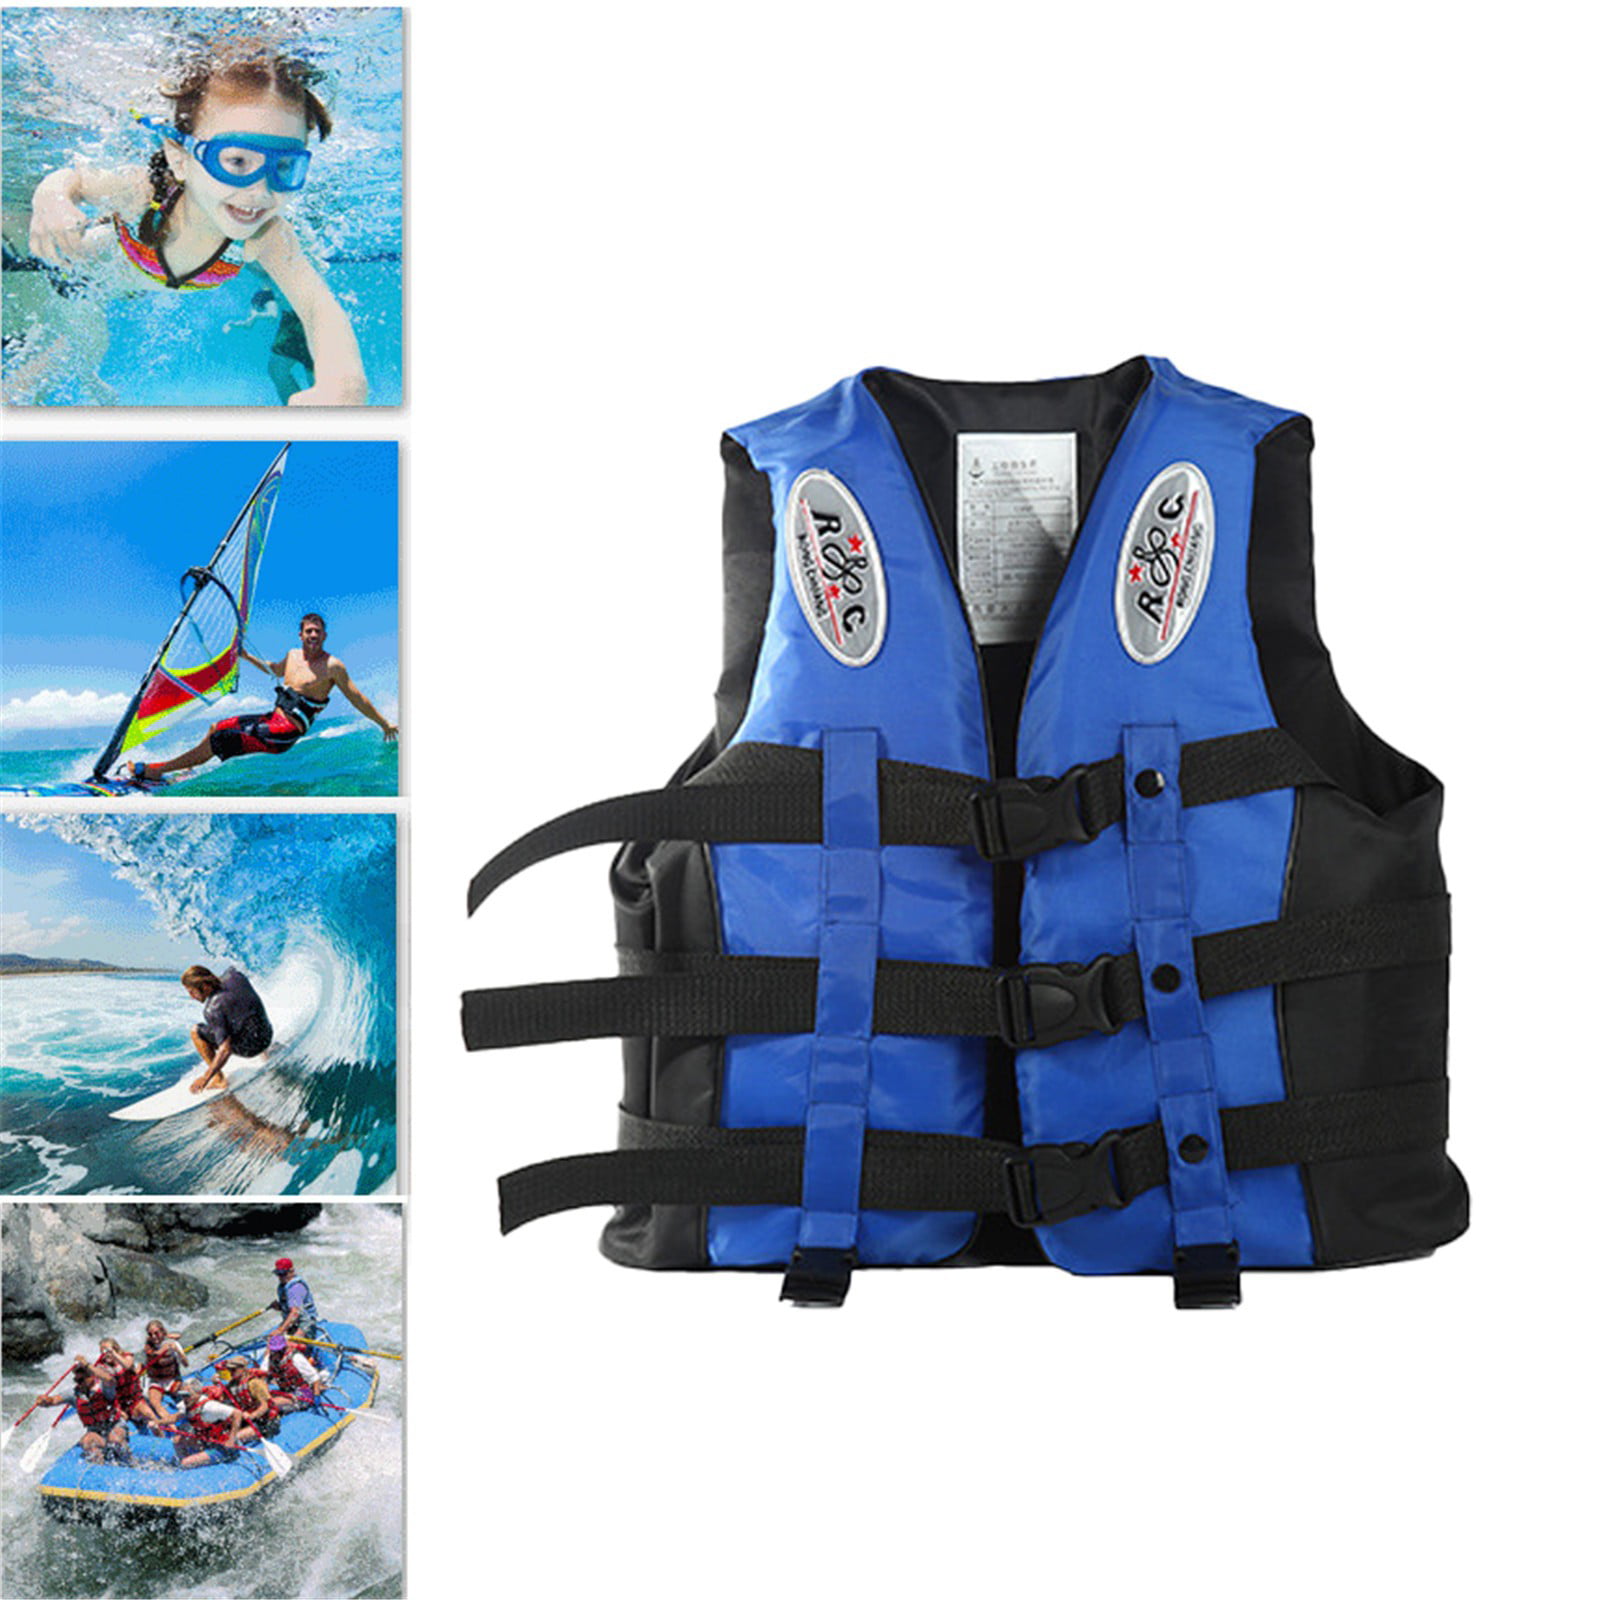 Adults Life Jacket Aid Vest Kayak Ski Buoyancy Fishing Sail Boat Watersport 